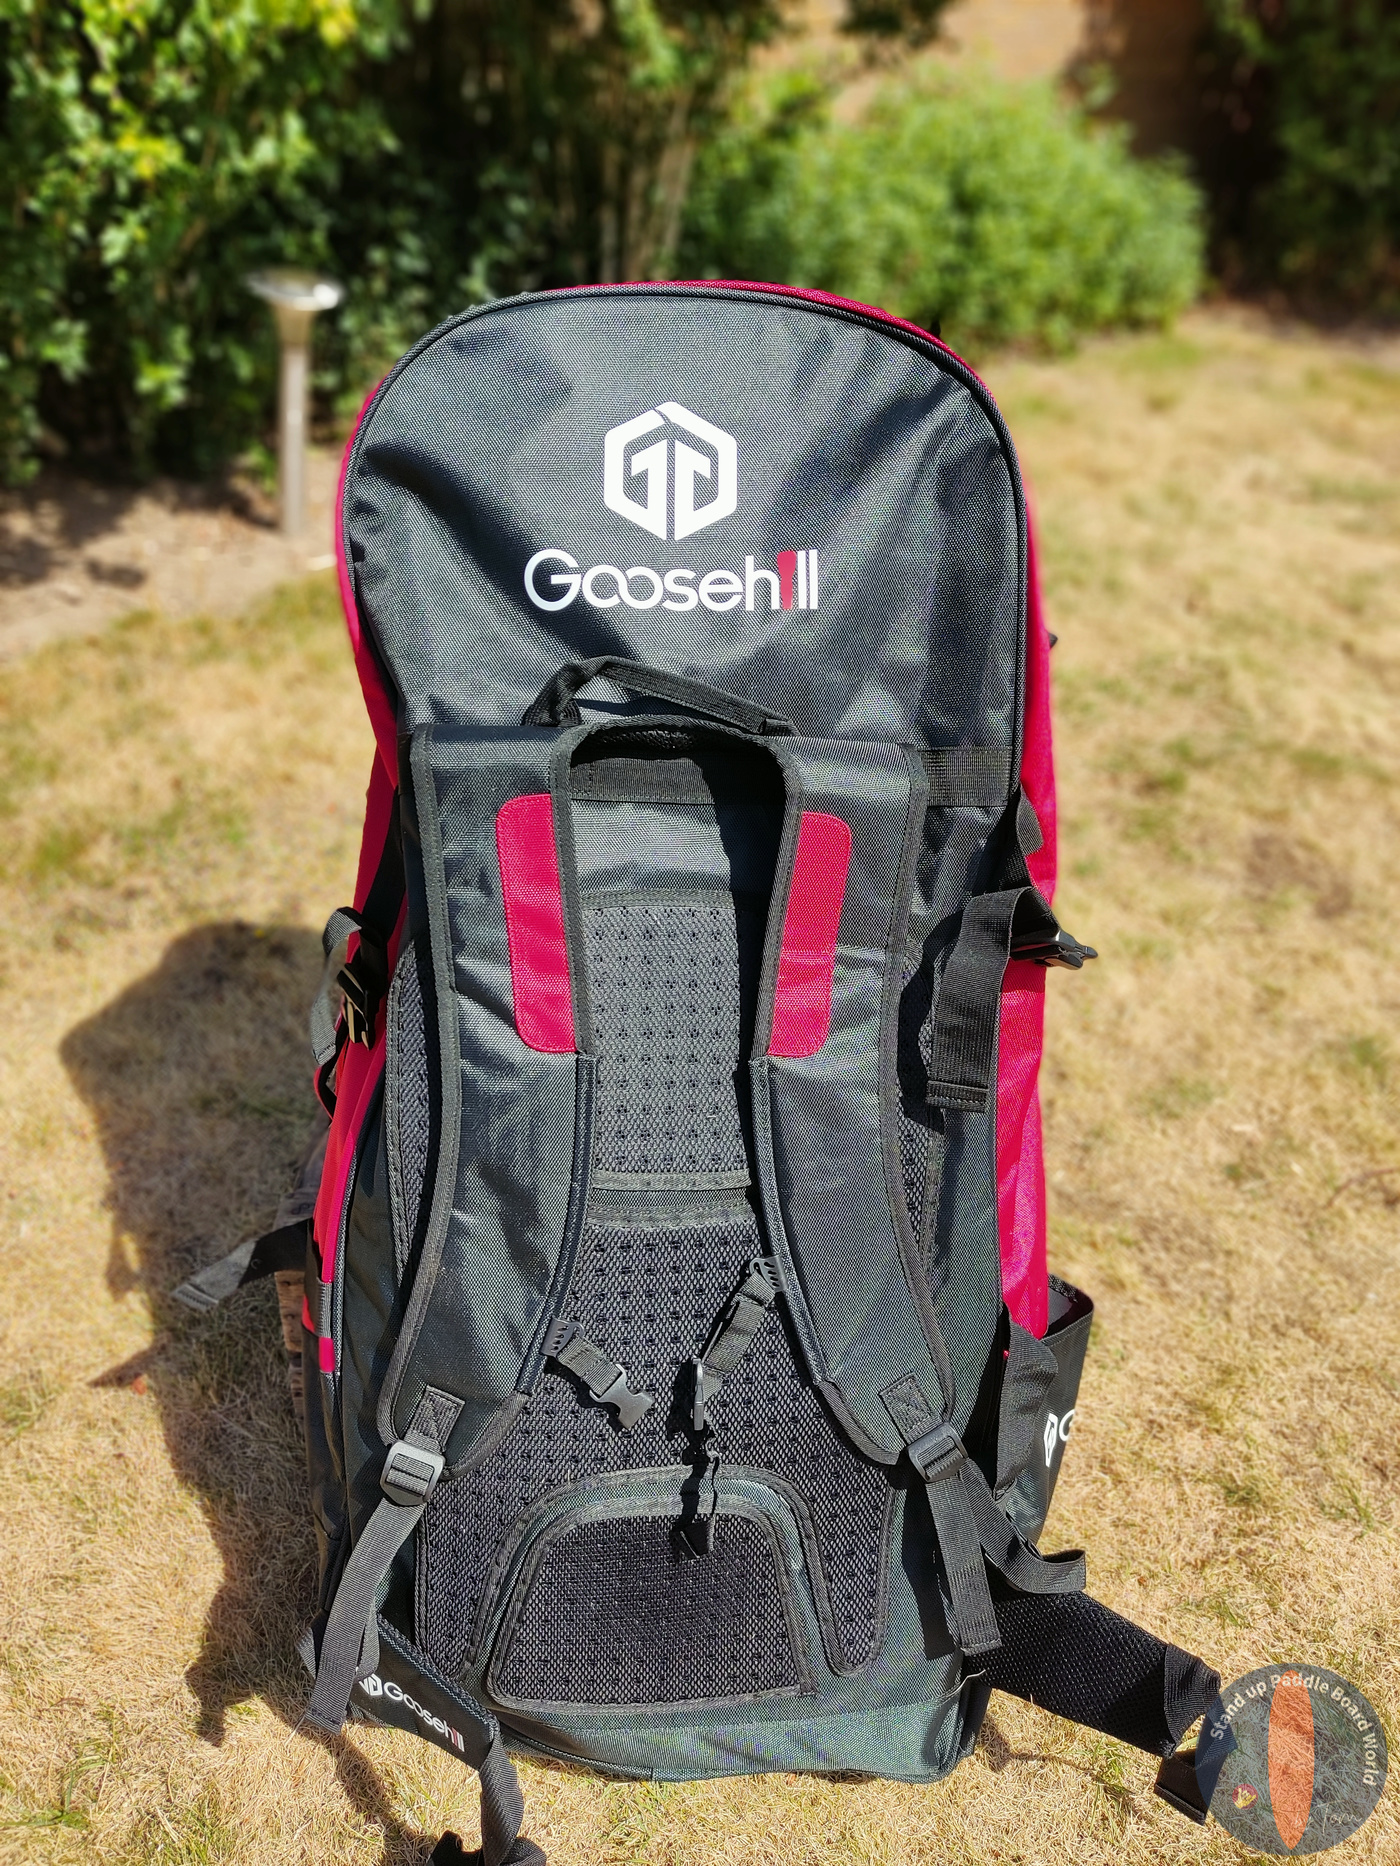 Goosehill Sailor Racing backpack